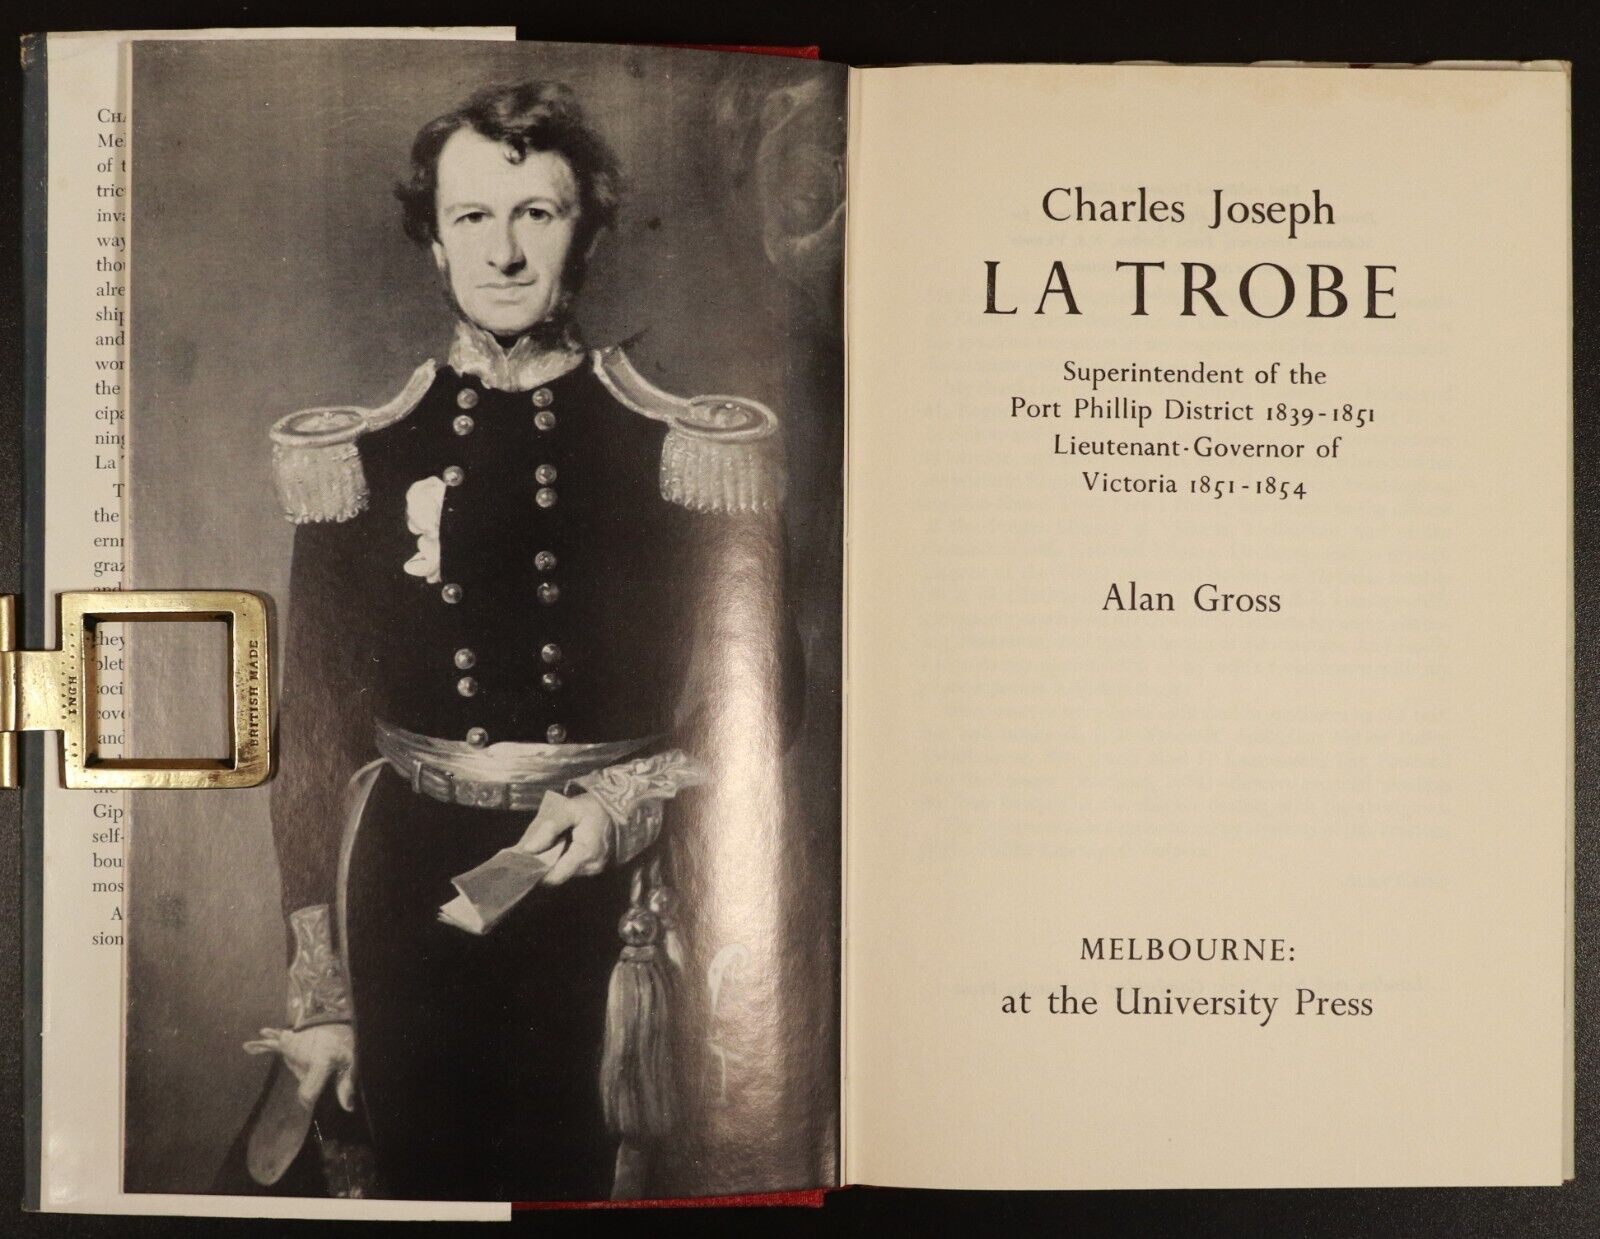 1956 Charles Joseph La Trobe by Alan Gross Vintage Australian History Book 1st